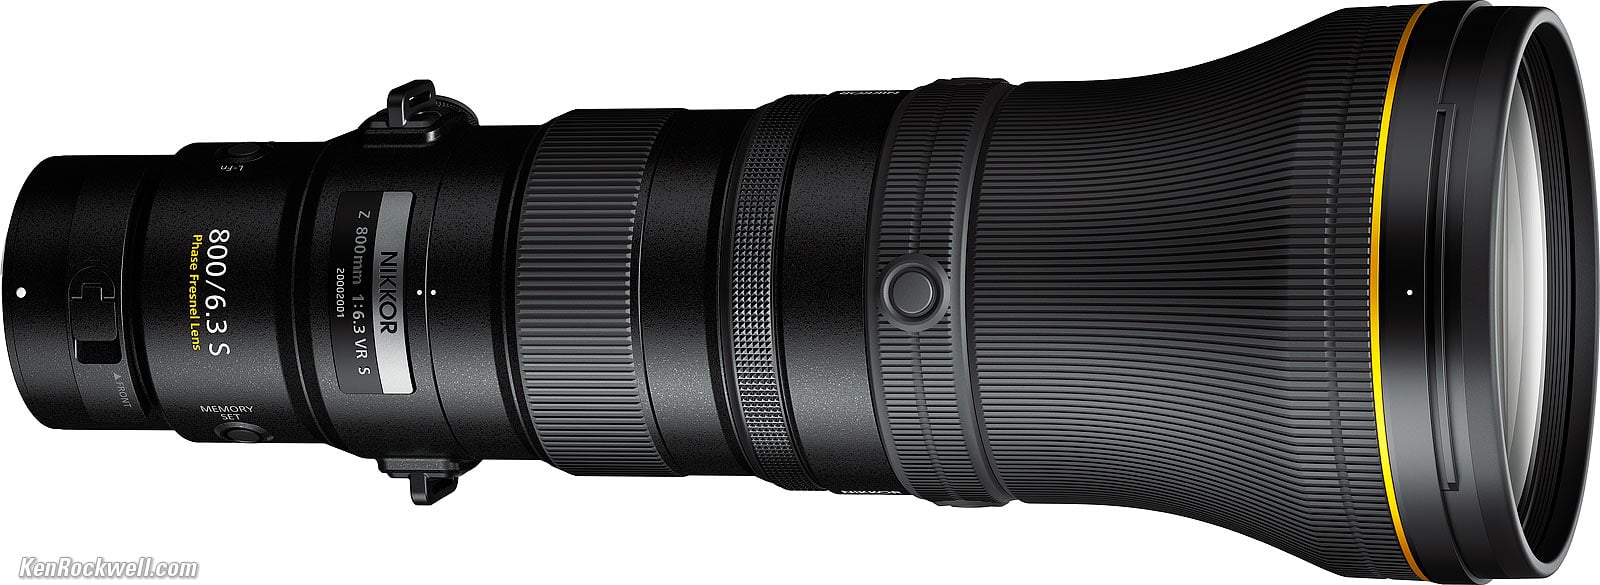 Nikon Z 800mm f/6.3 VR Review by Ken Rockwell